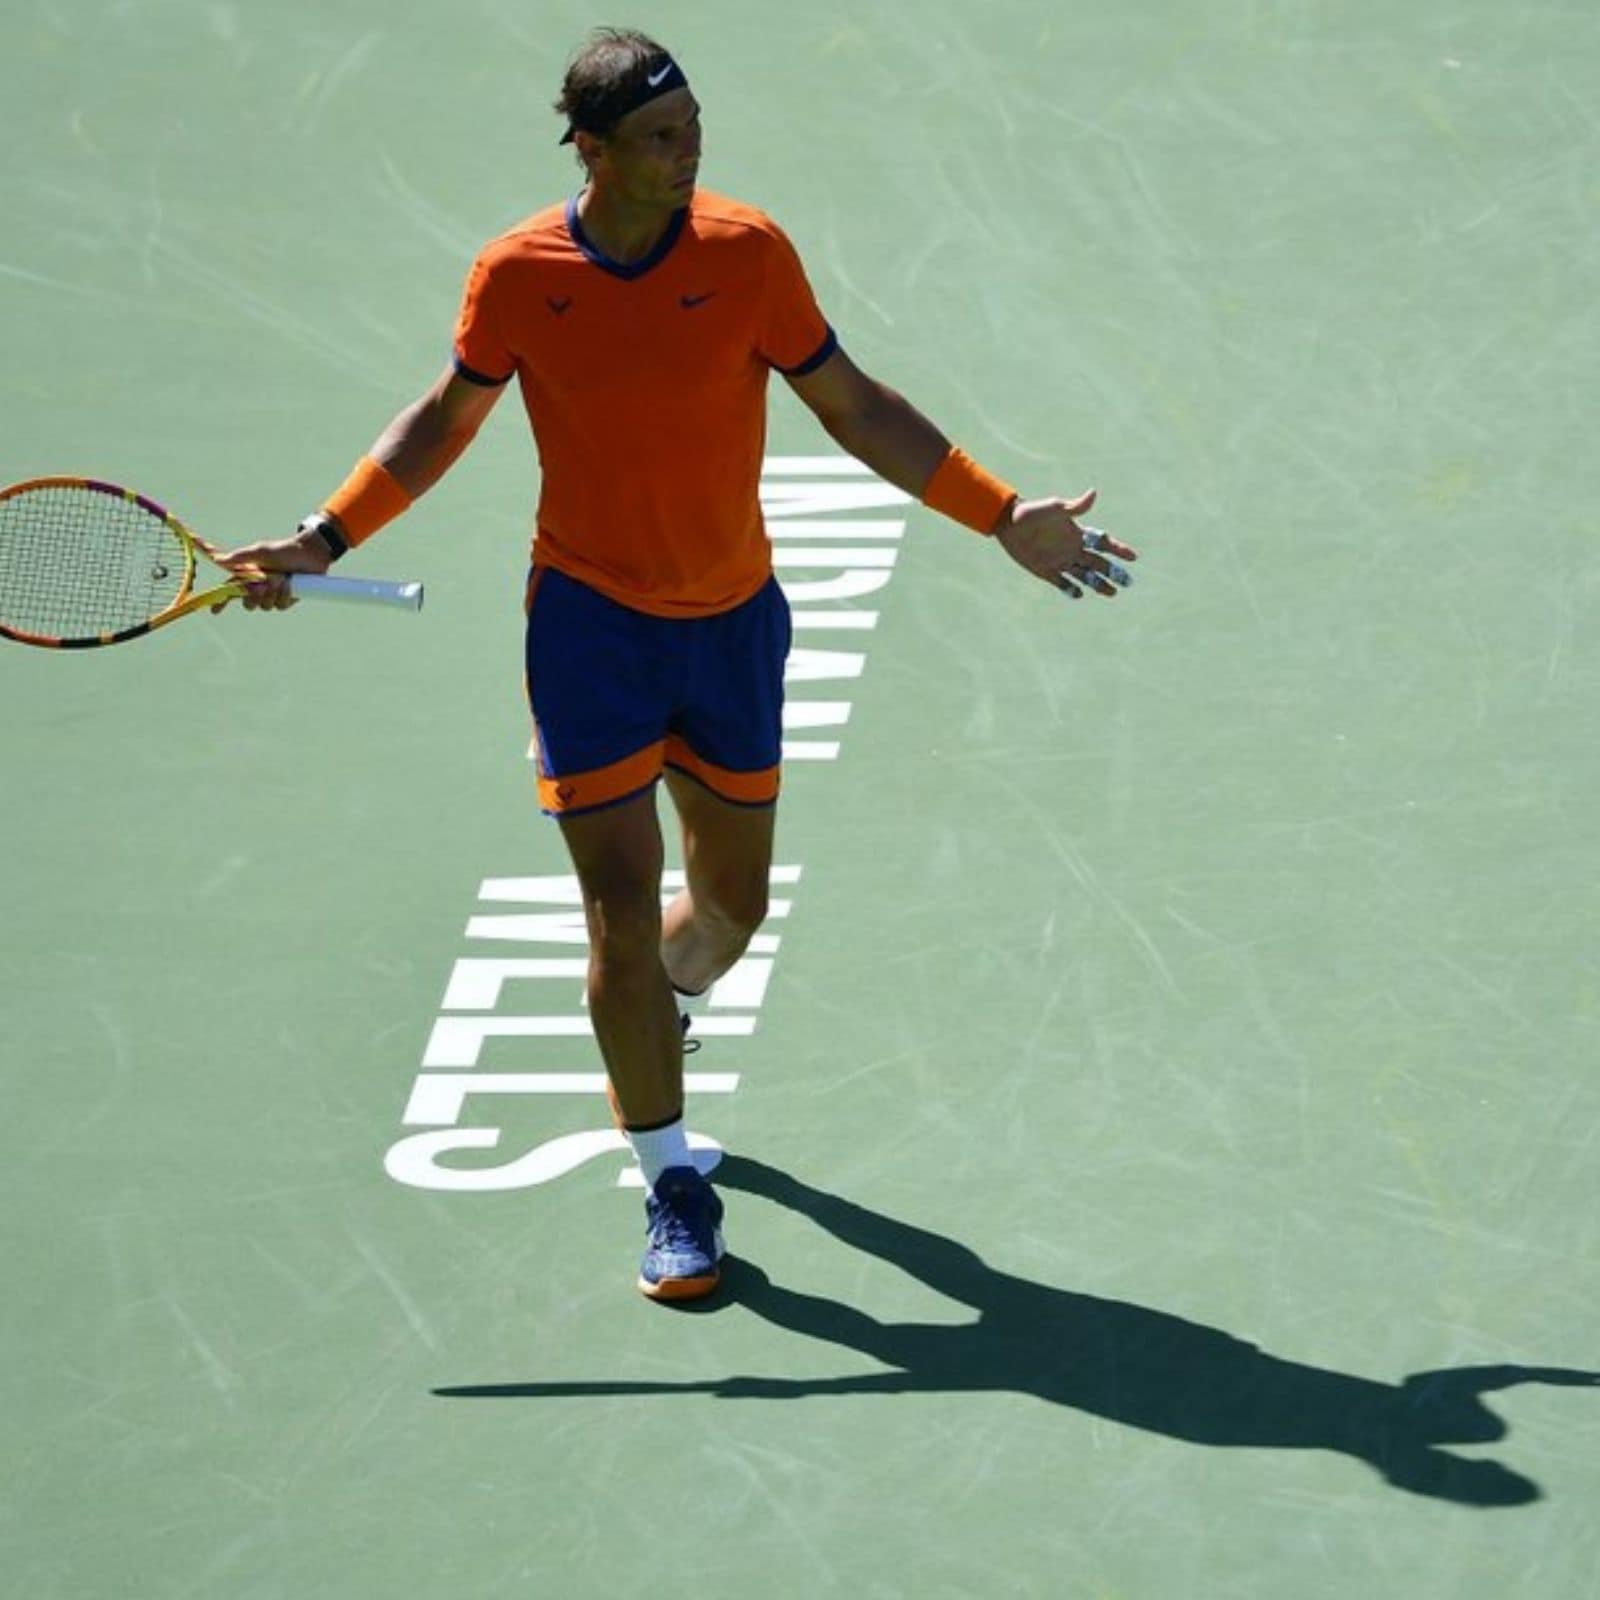 Rafael Nadal beats Nick Kyrgios in 3 Sets at Indian Wells, Goes to 19-0